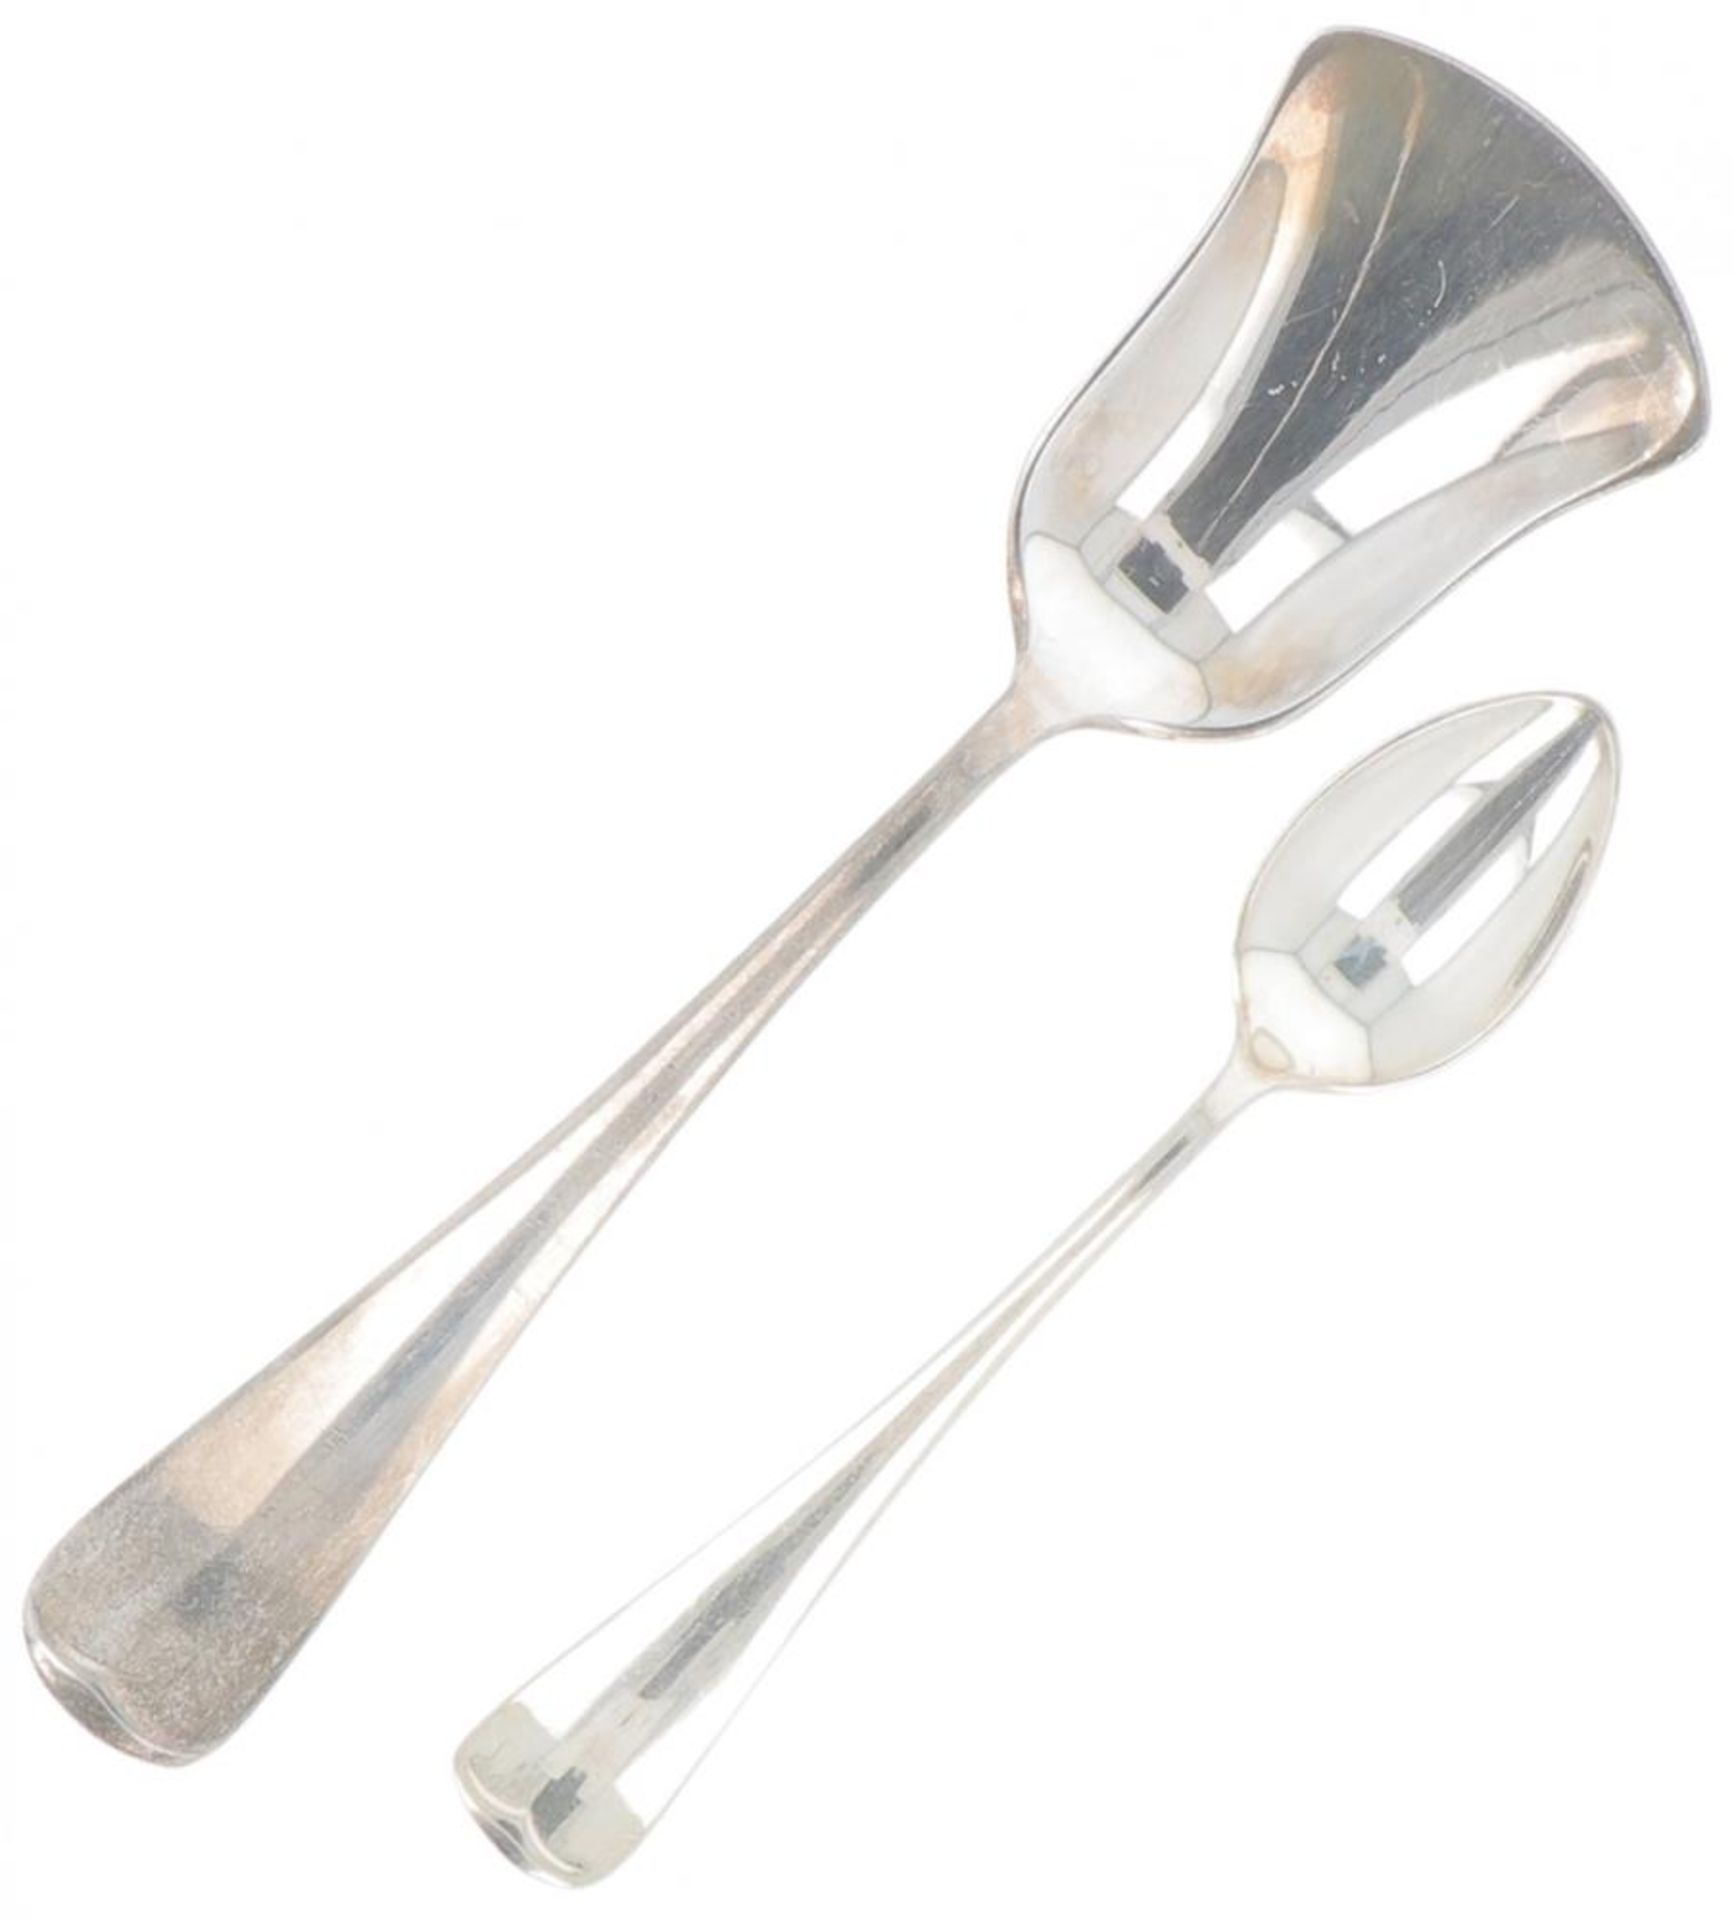 (8) piece set of mocha spoons & sugar scoop "Haags Lofje" silver. - Image 2 of 4